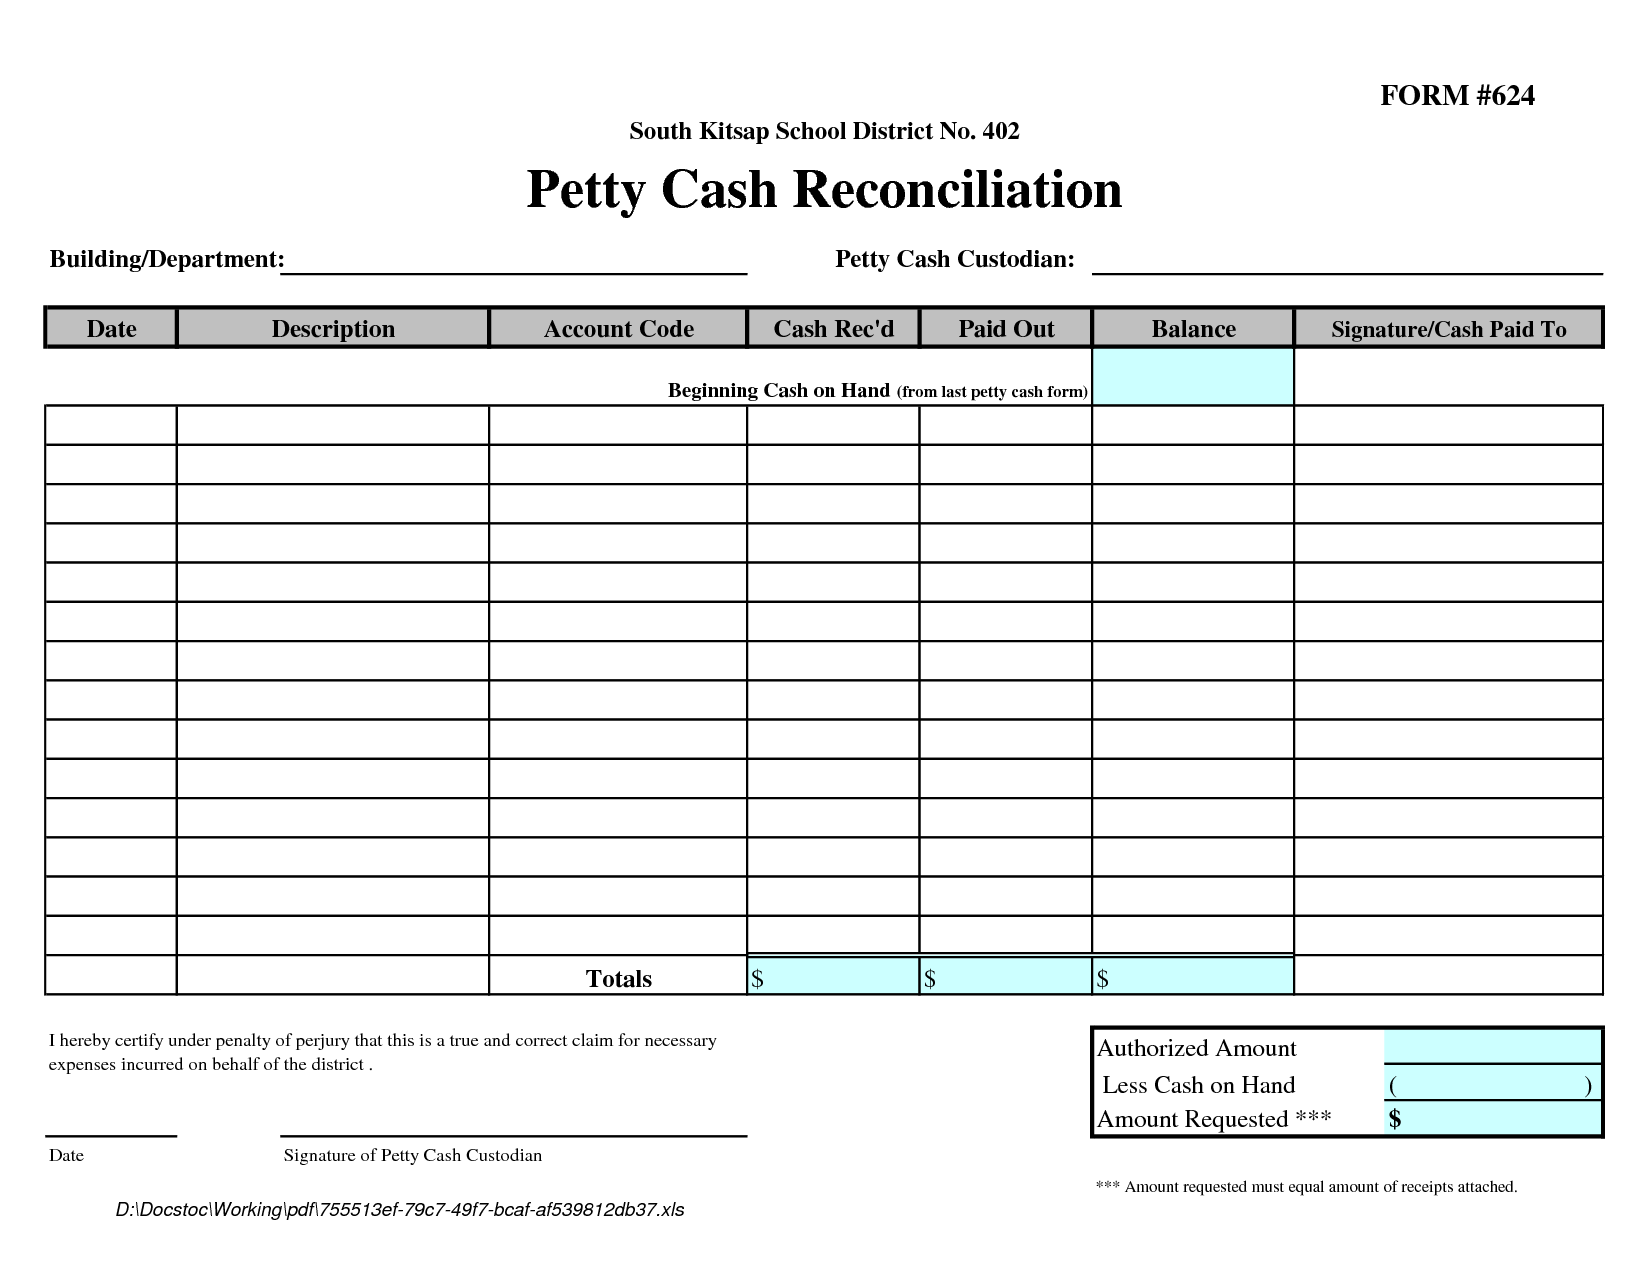 Petty Cash Reconciliation Form Template | HHH | Pinterest | Template